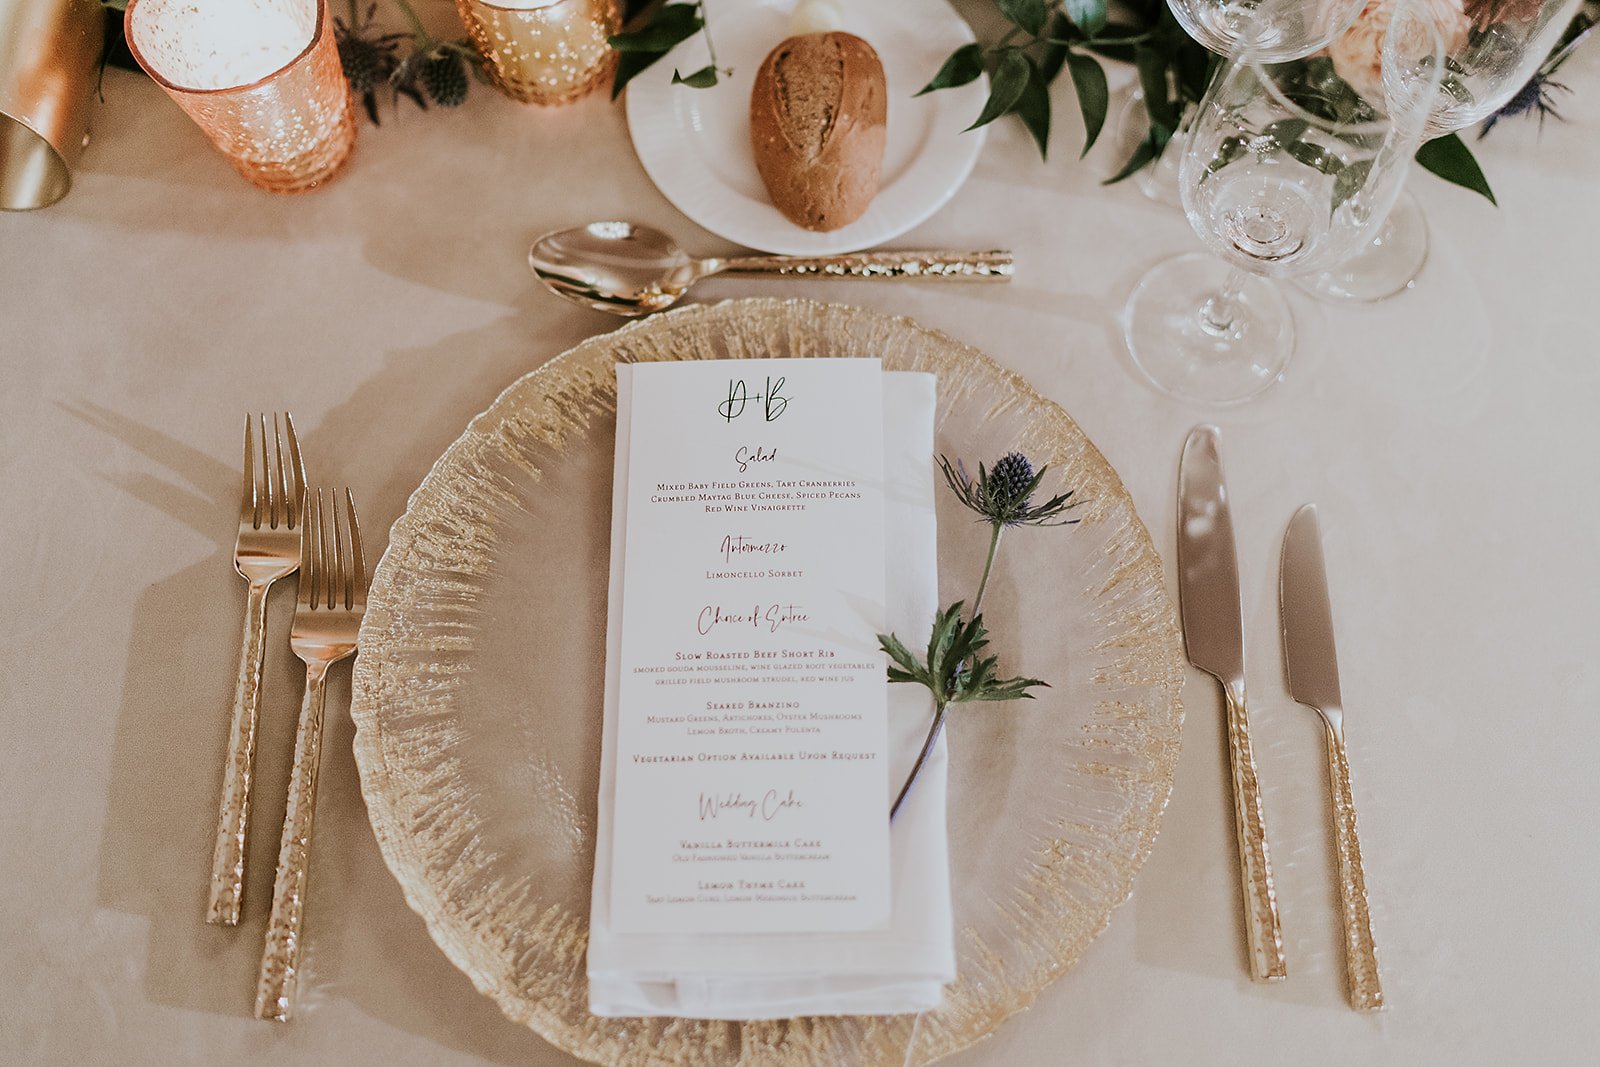  wedding dinner menus by hello, bird | photo by m2 photography 